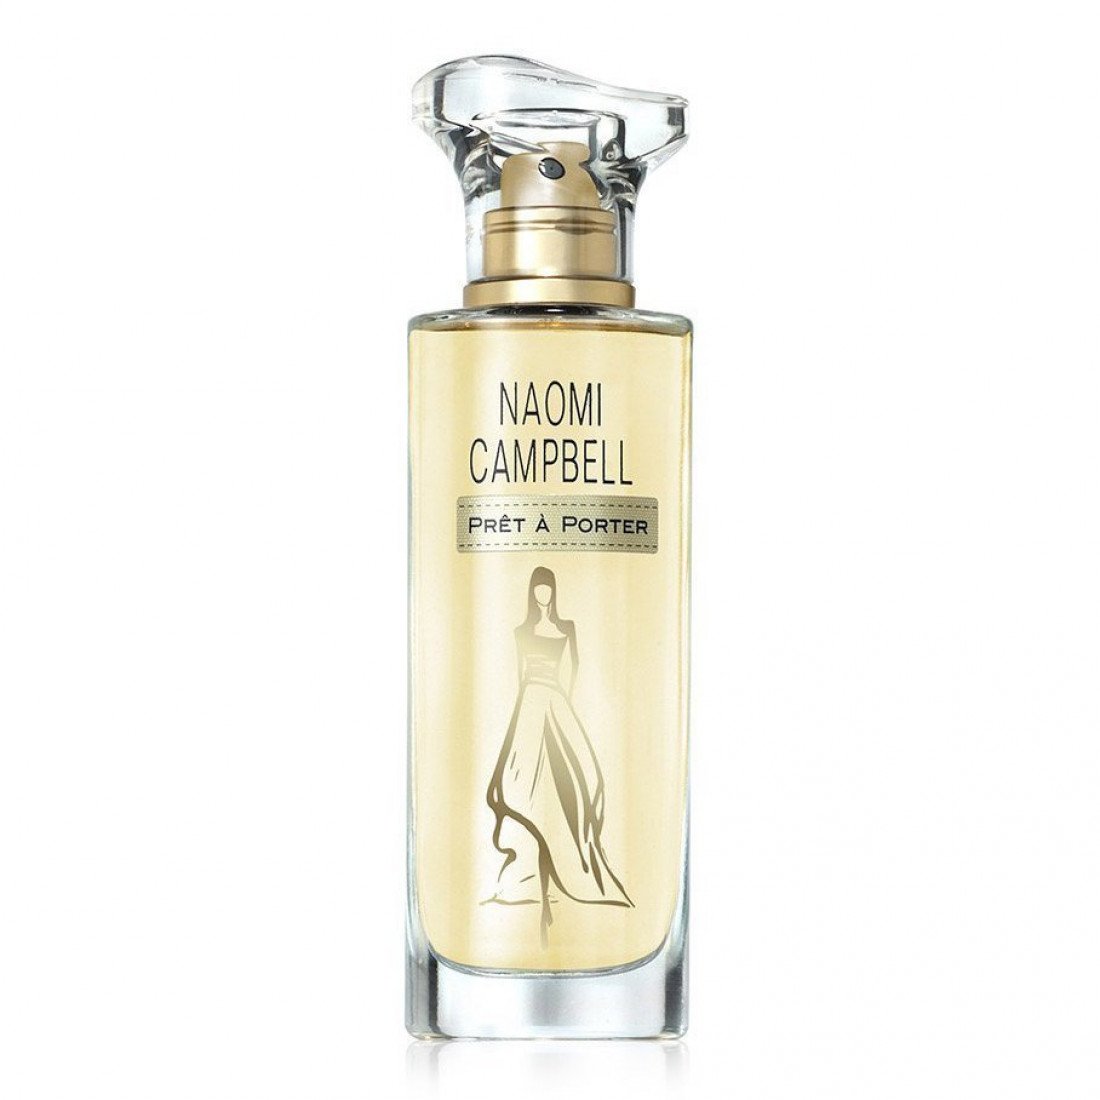 Naomi Campbell Pret A Porter Eau de Toilette Spray 30ml - Feel Gorgeous